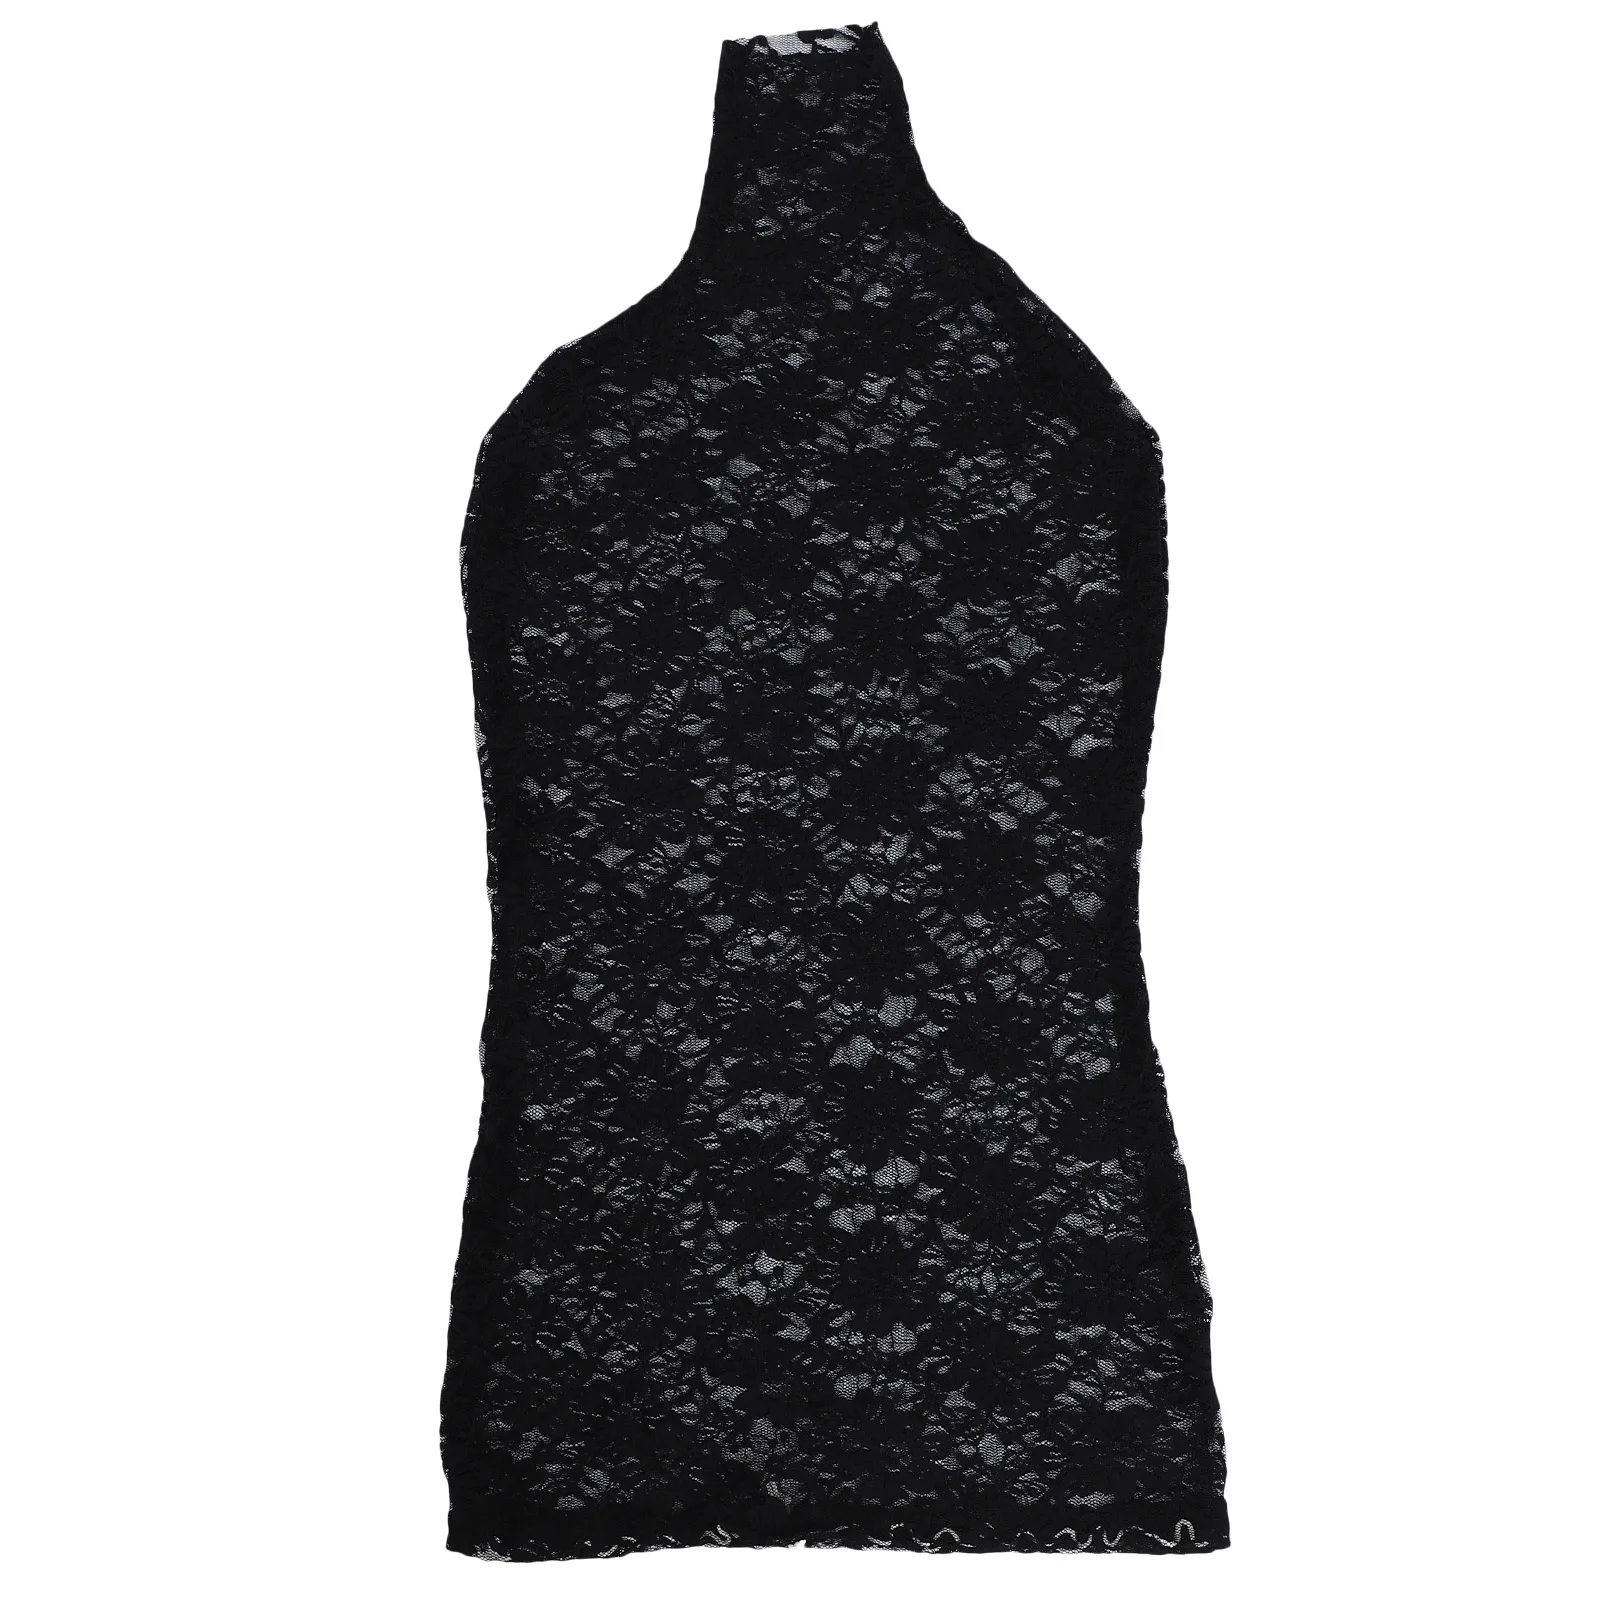 Handmade Mannequin Cover Fabric Black Formal Dresses Manikin Body Torso Nursing Accessories